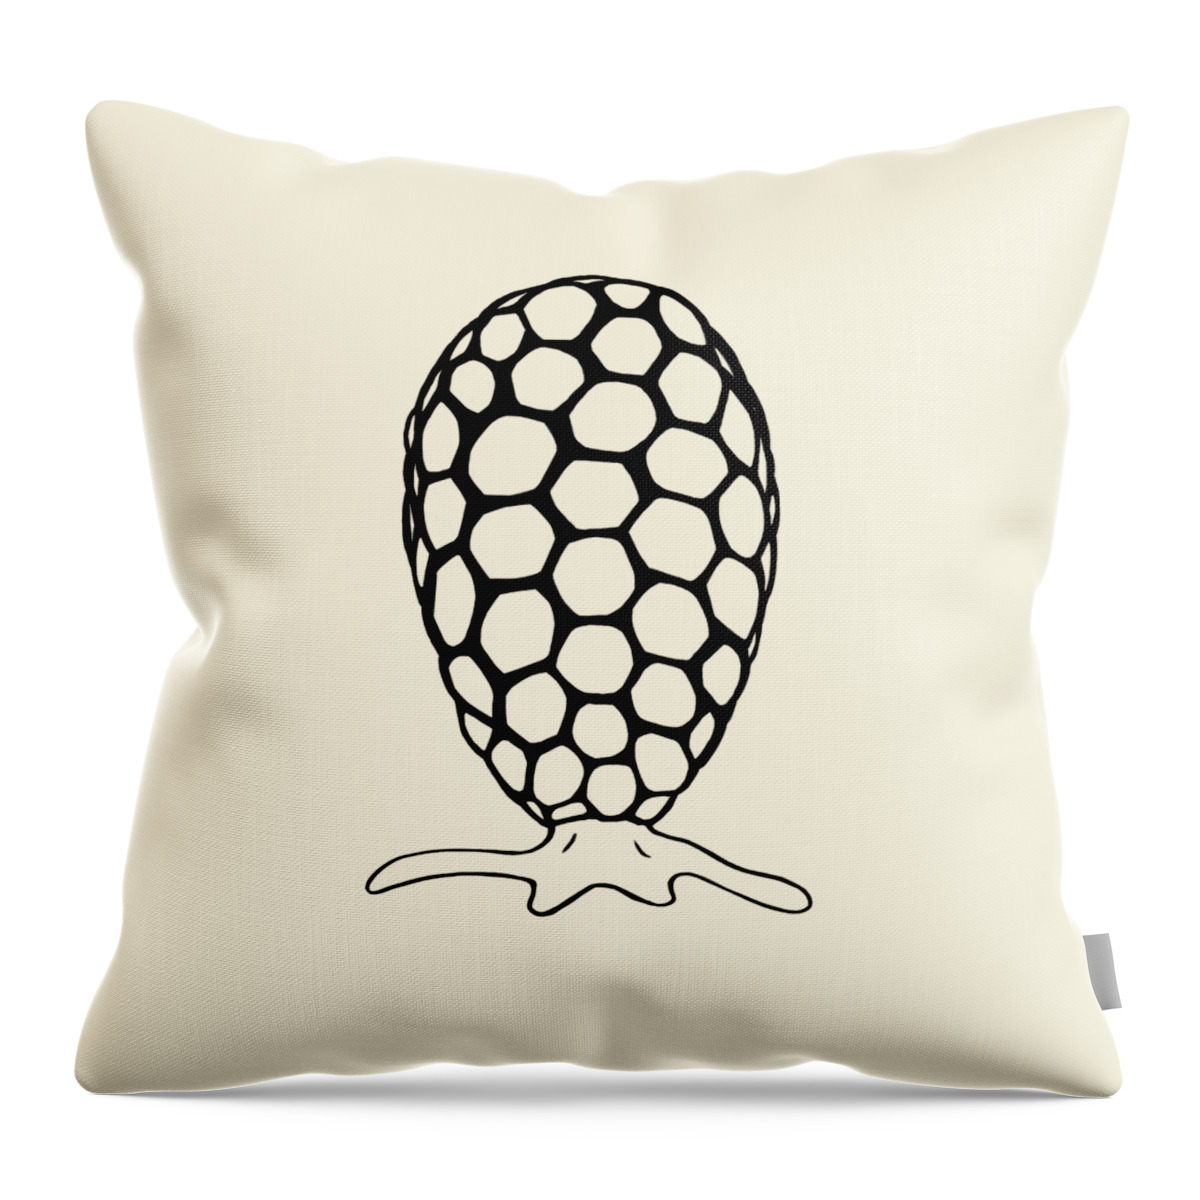 Protozoa Throw Pillow featuring the digital art Testate Amoeba by Kate Solbakk